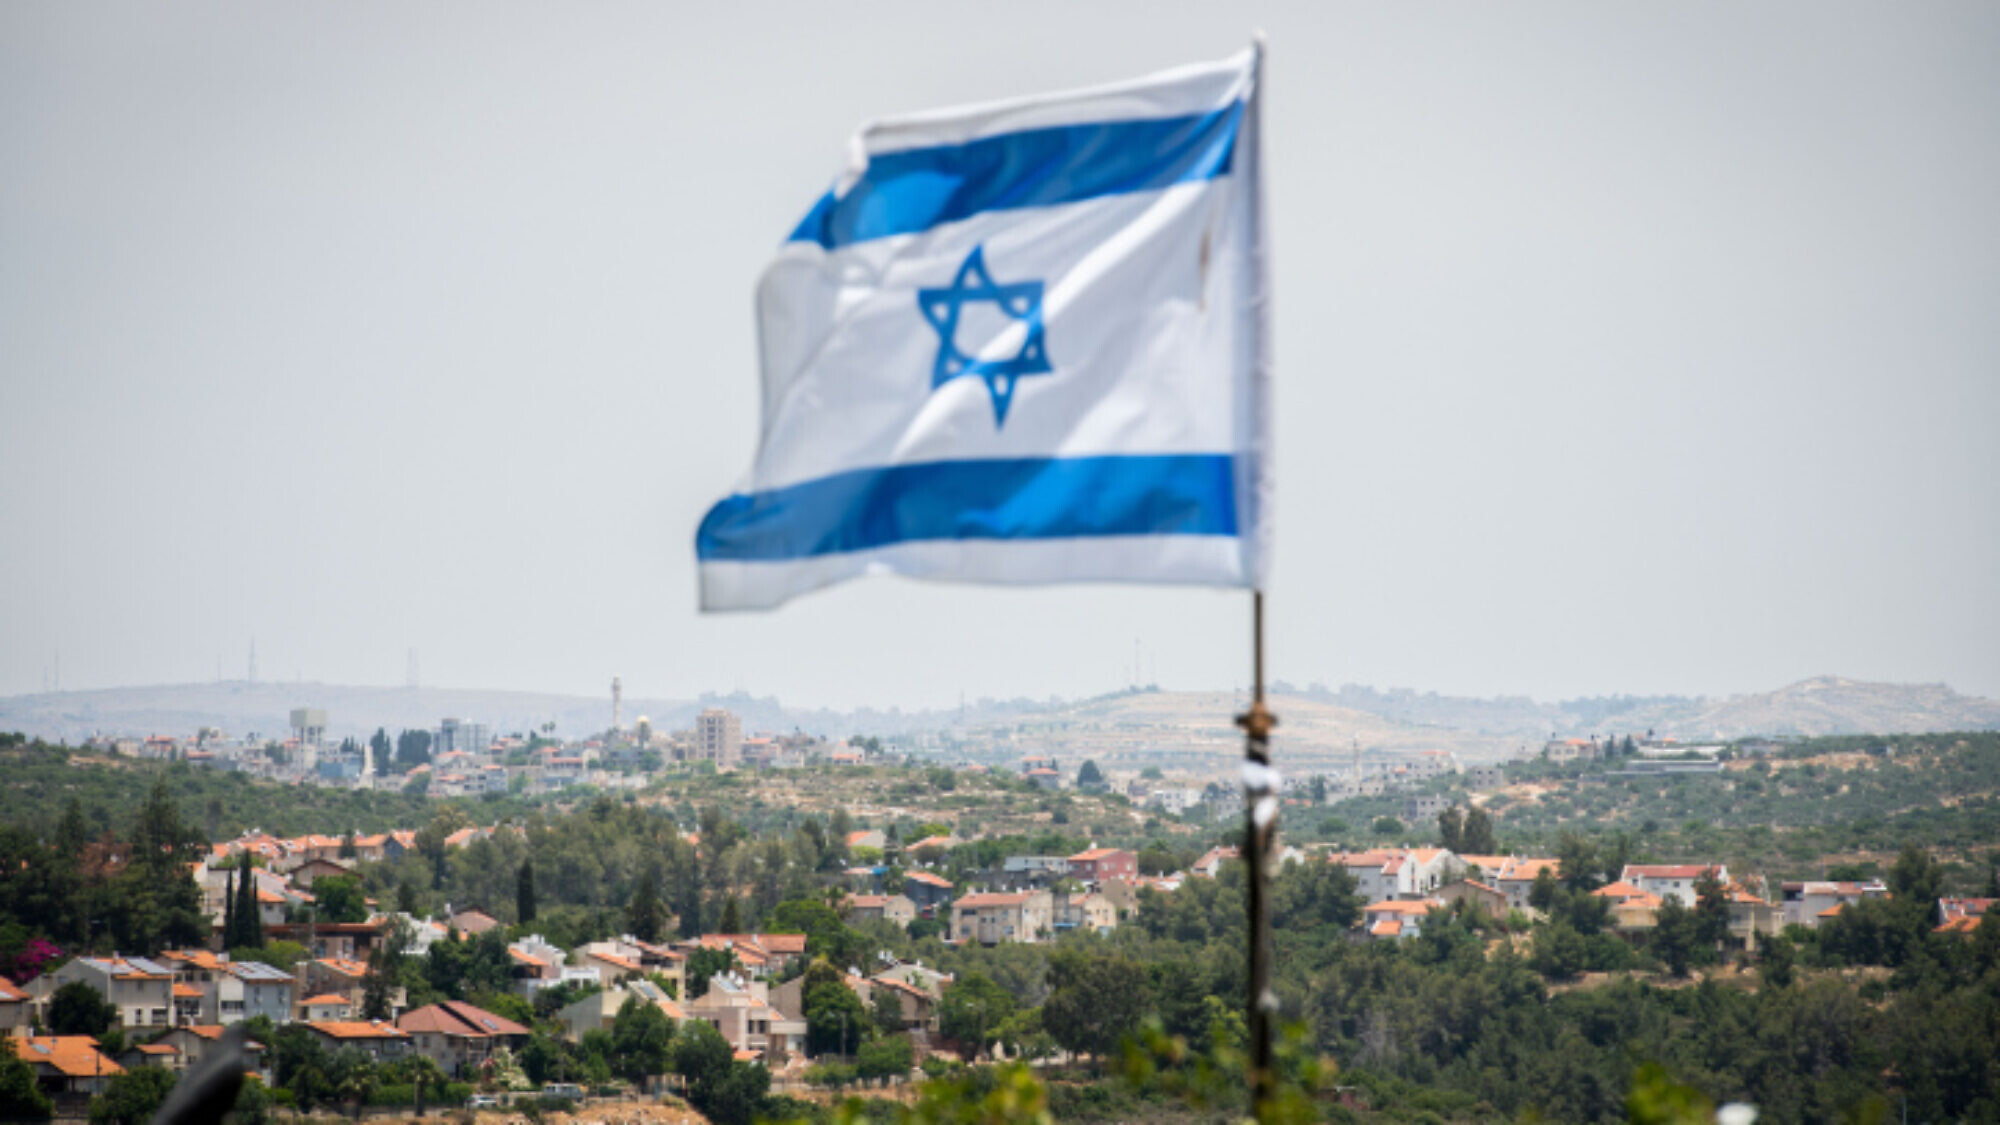 The Jewish town of Karnei Shomron in Judea and Samaria, on June 4, 2020. Photo by Sraya Diamant/Flash90.